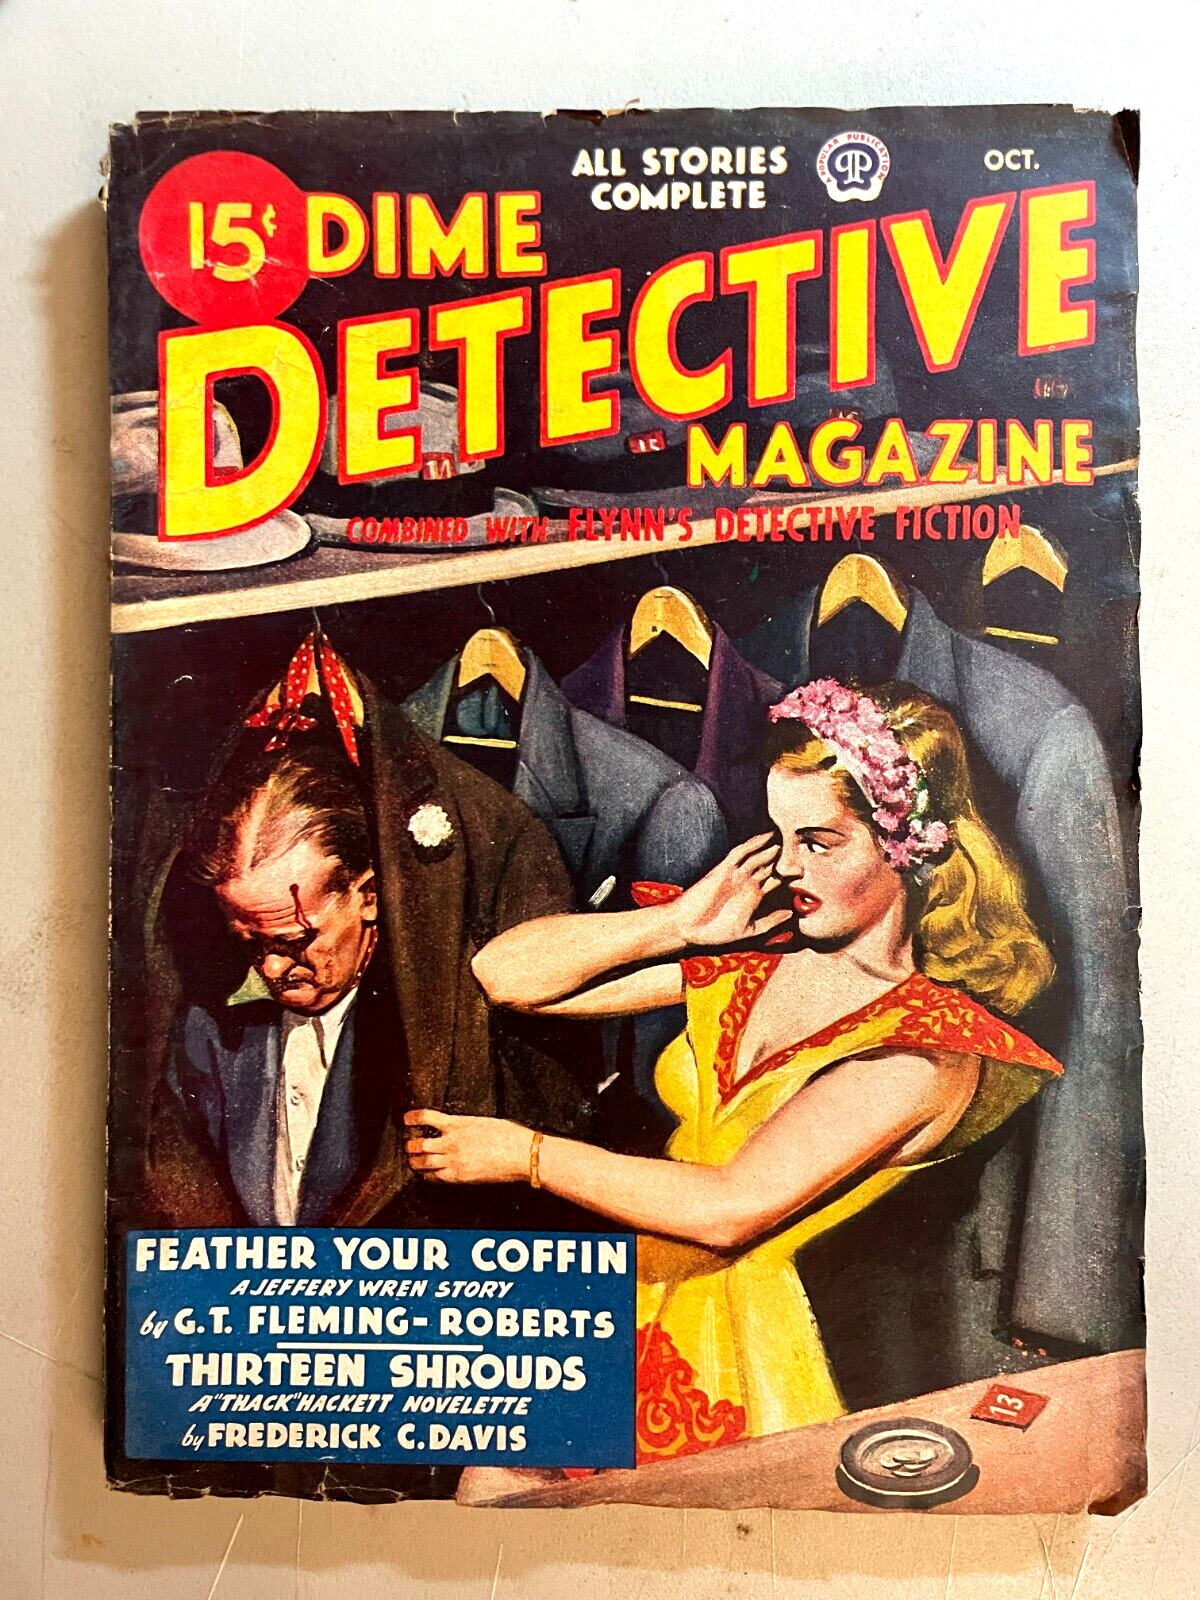 Dime Detective Magazine / OCTOBER 1946 / Magazine / Pulp / Crime Cover